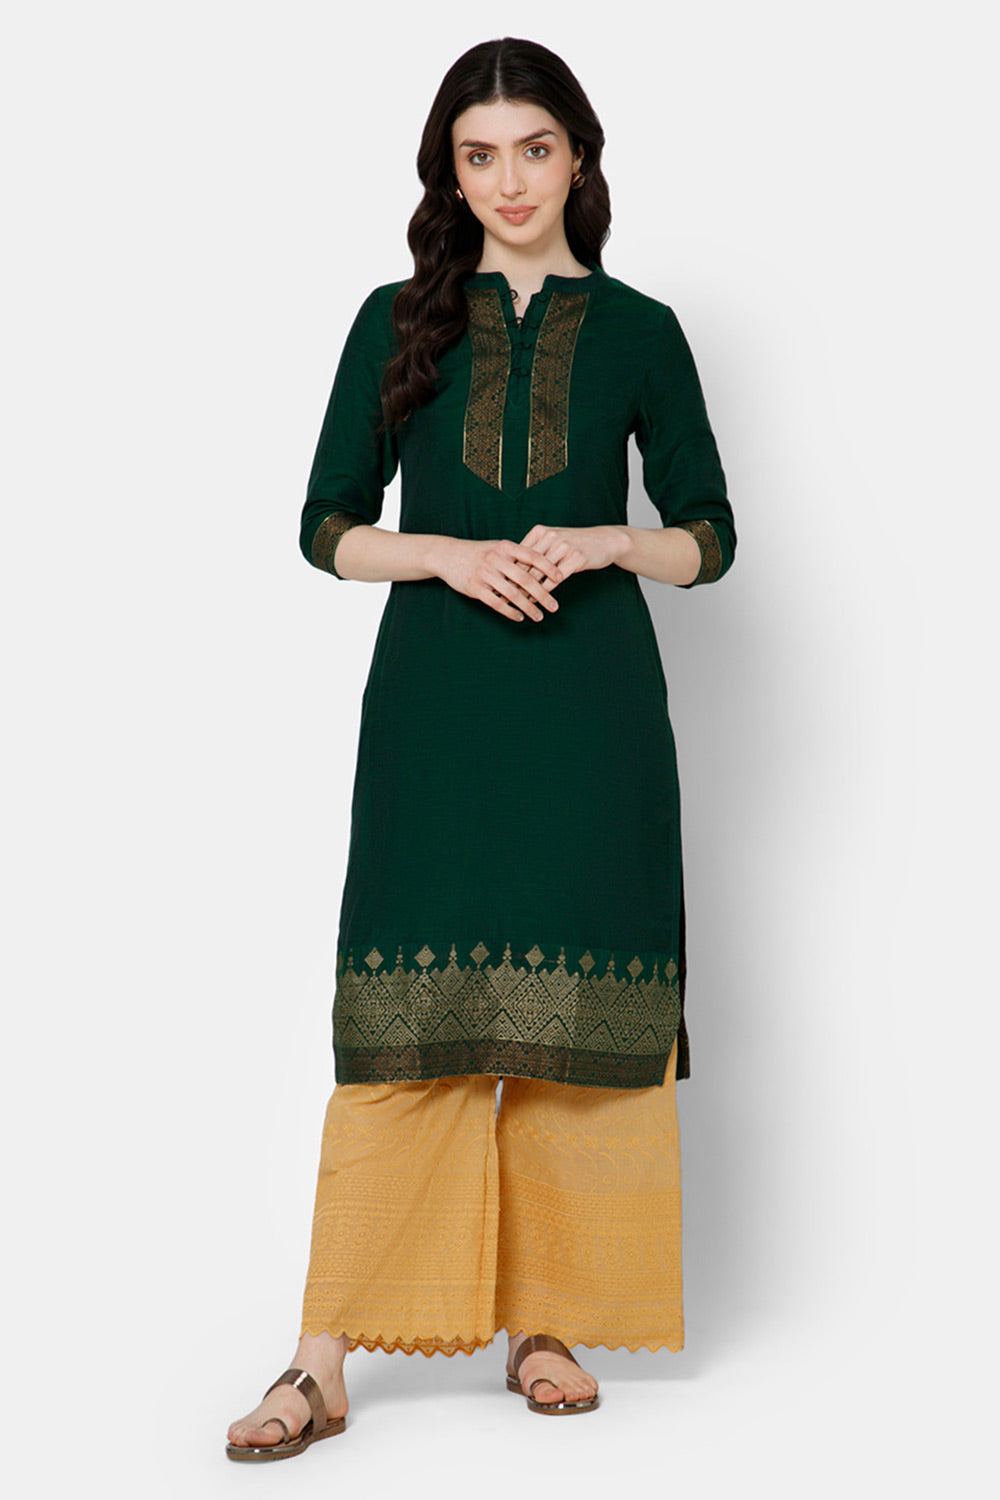 Mythri Women's Ethnic Wear Straight kurta - Green - KU53